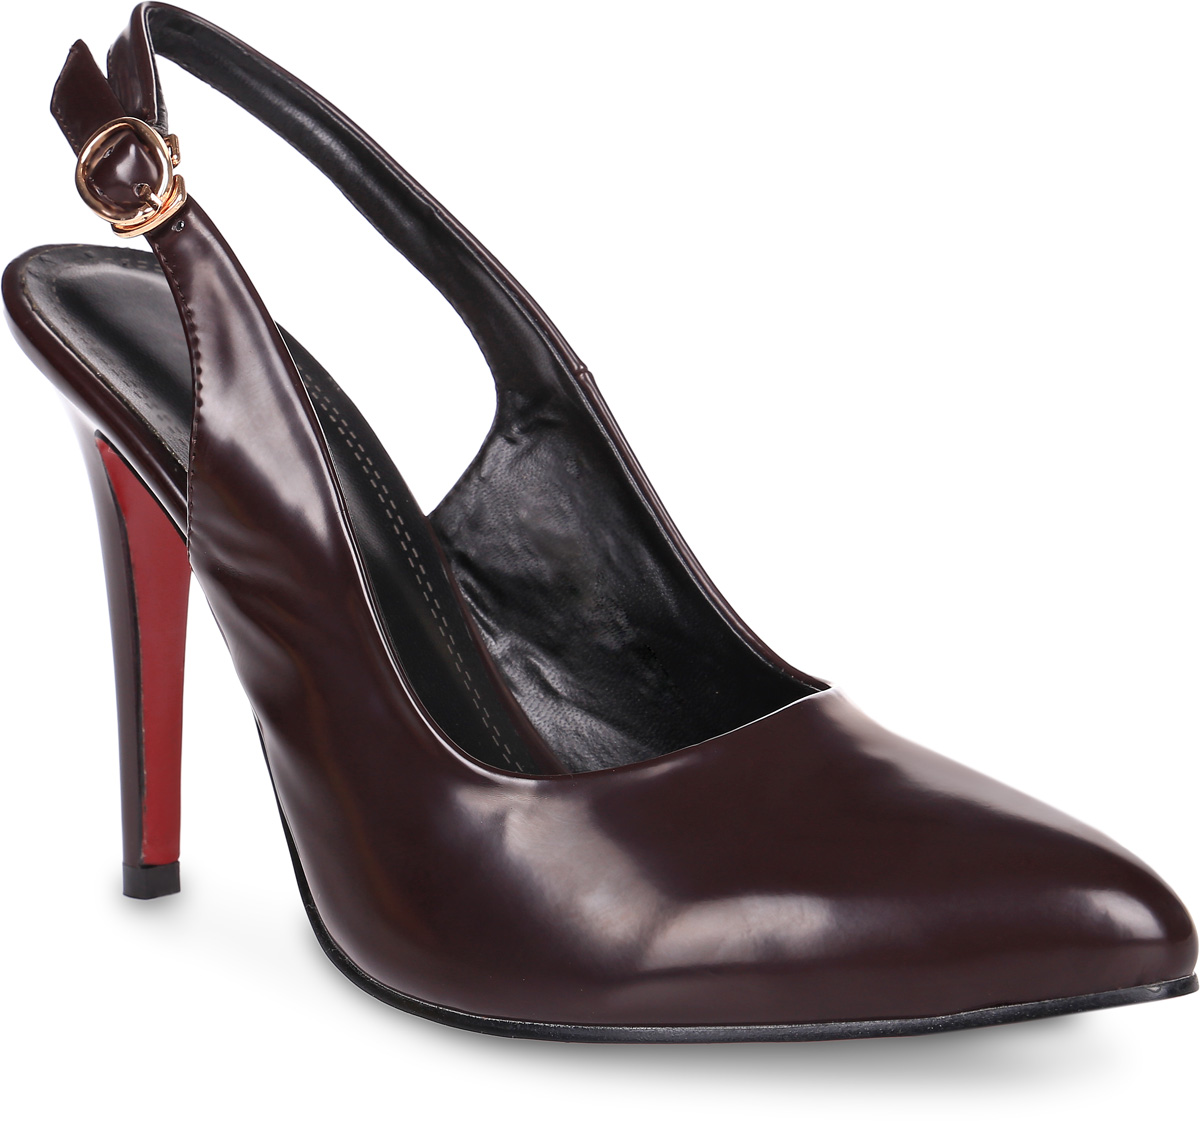 Туфли женские Inario, цвет: коричневый. 17068-01-18. Размер 36